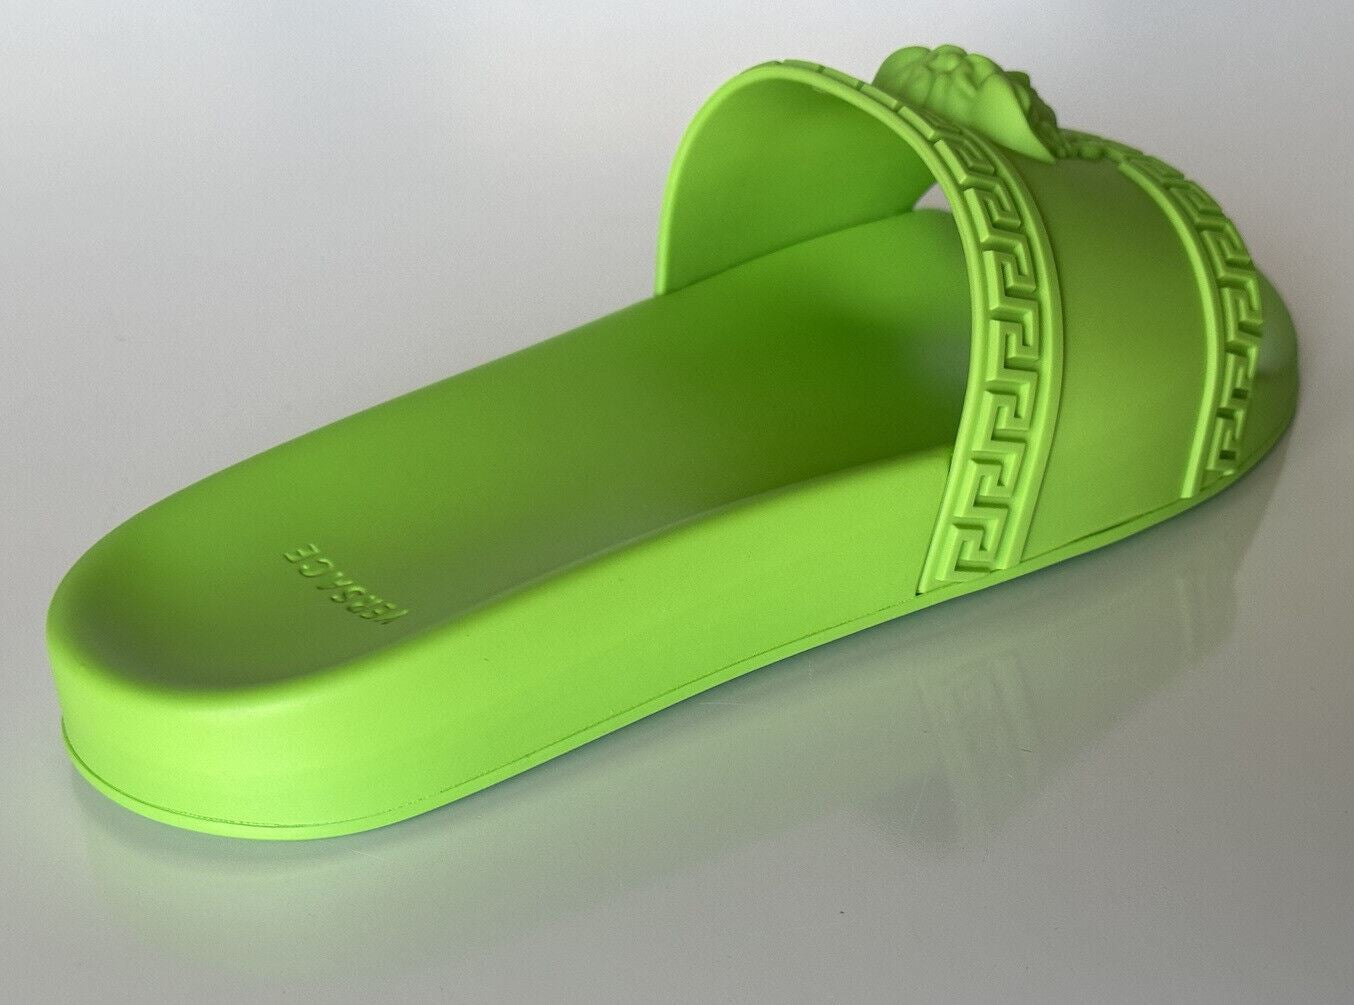 NIB Versace Medusa Head Slides Sandals Neon Green 9 US (42 Euro) DSU5883 Italy